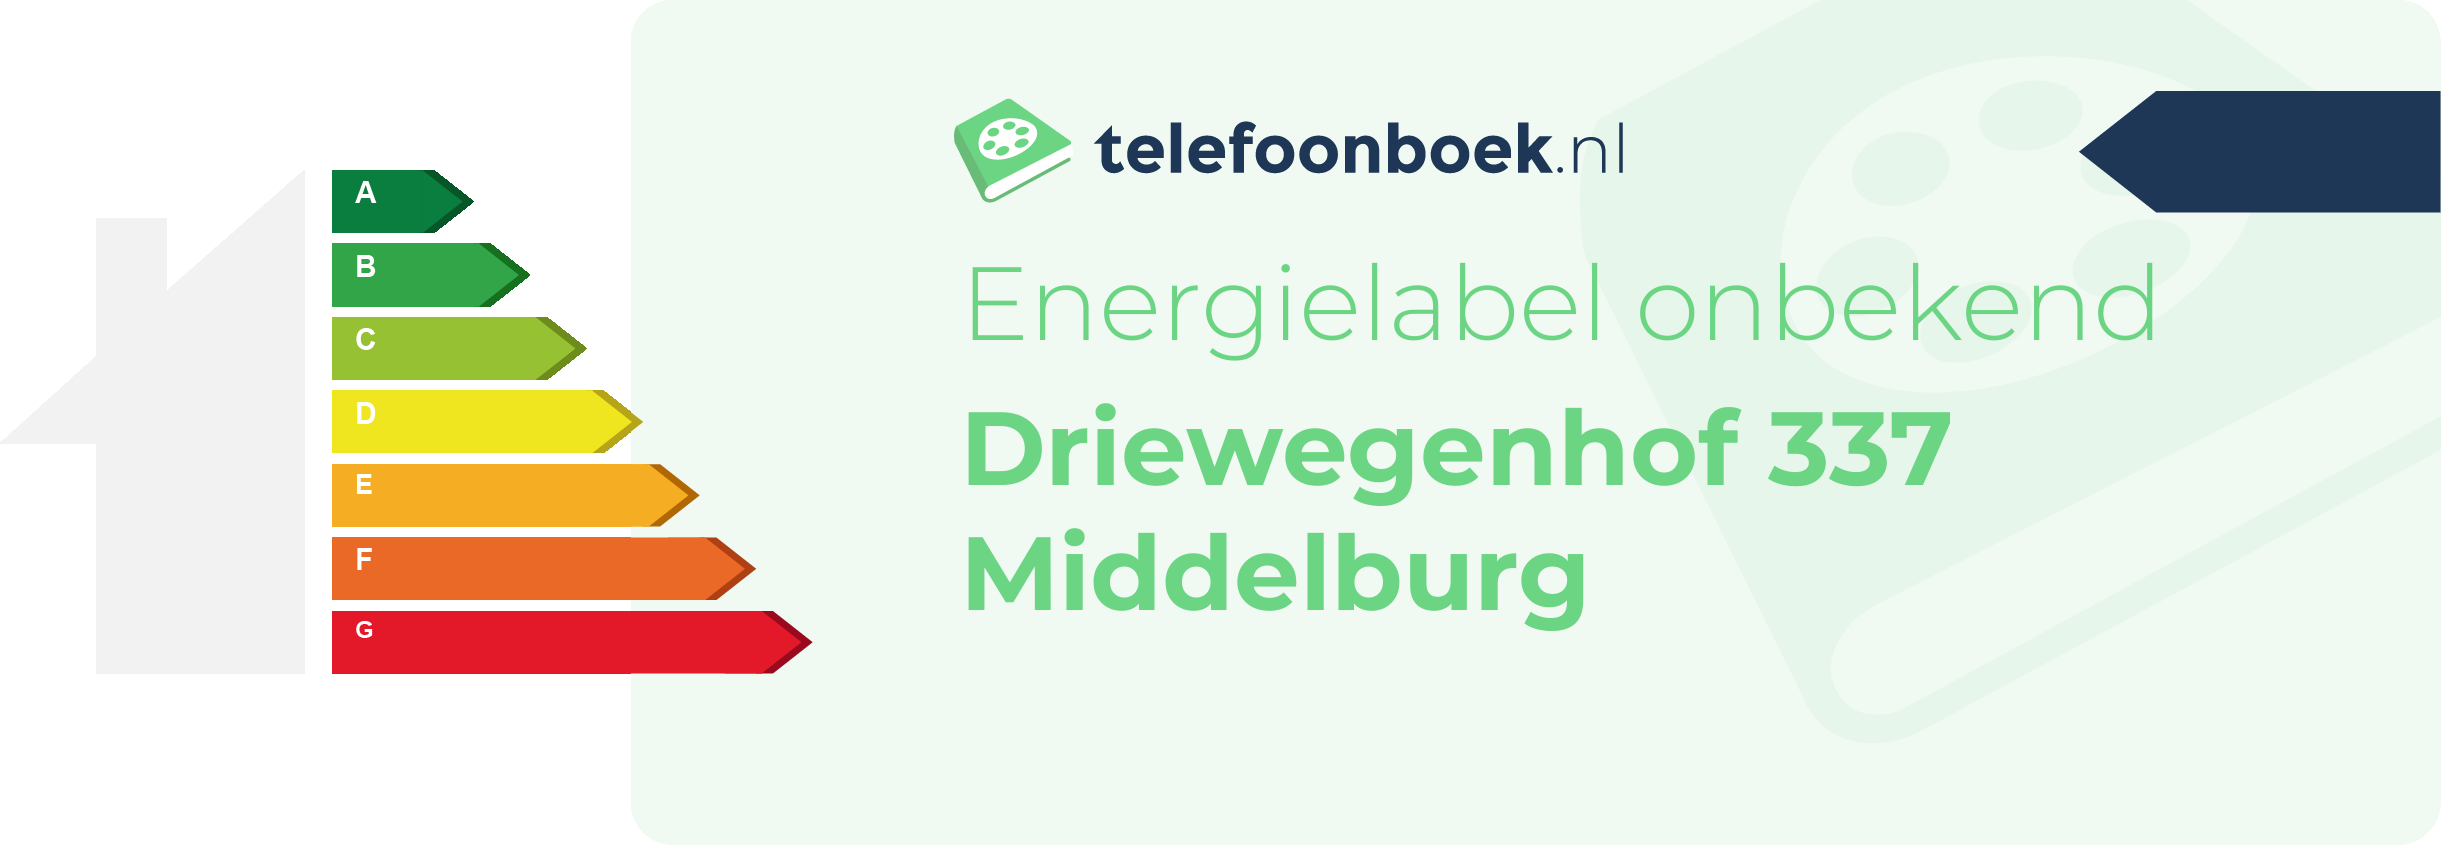 Energielabel Driewegenhof 337 Middelburg